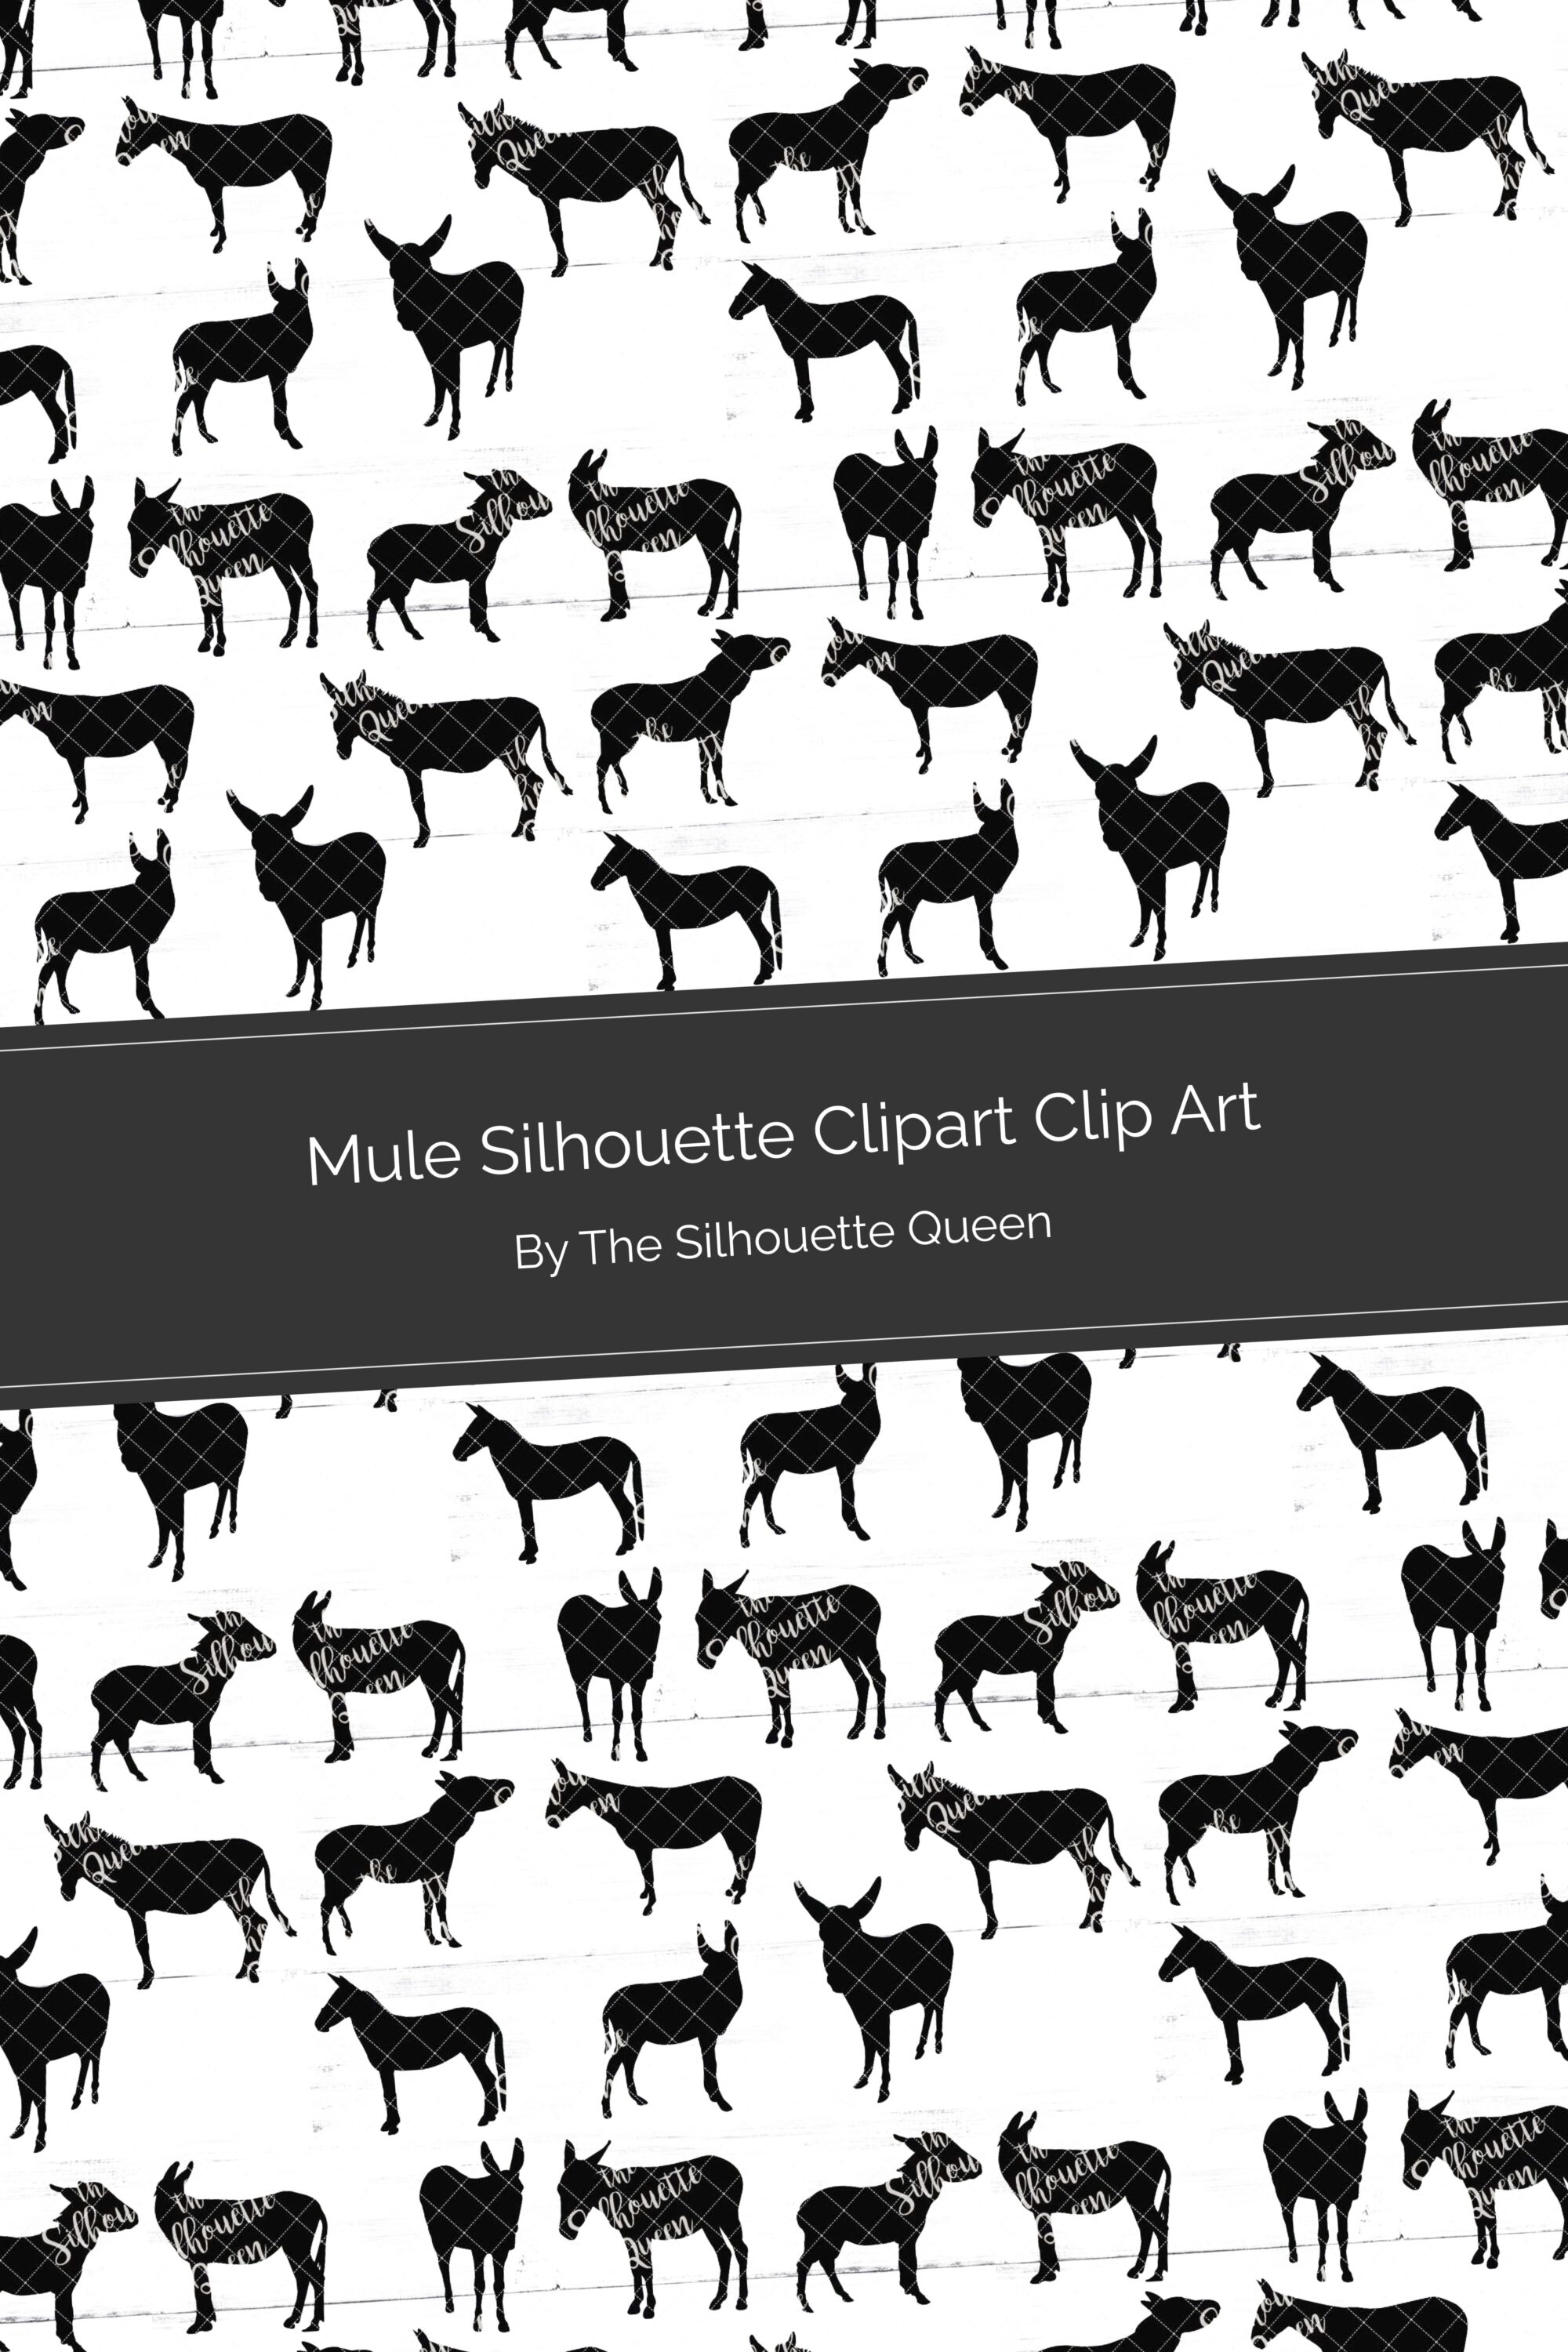 mule silhouette clipart clip artai eps svgs jpgs pngs pdf mule clip art clipart vectors commercial personal use 03 162